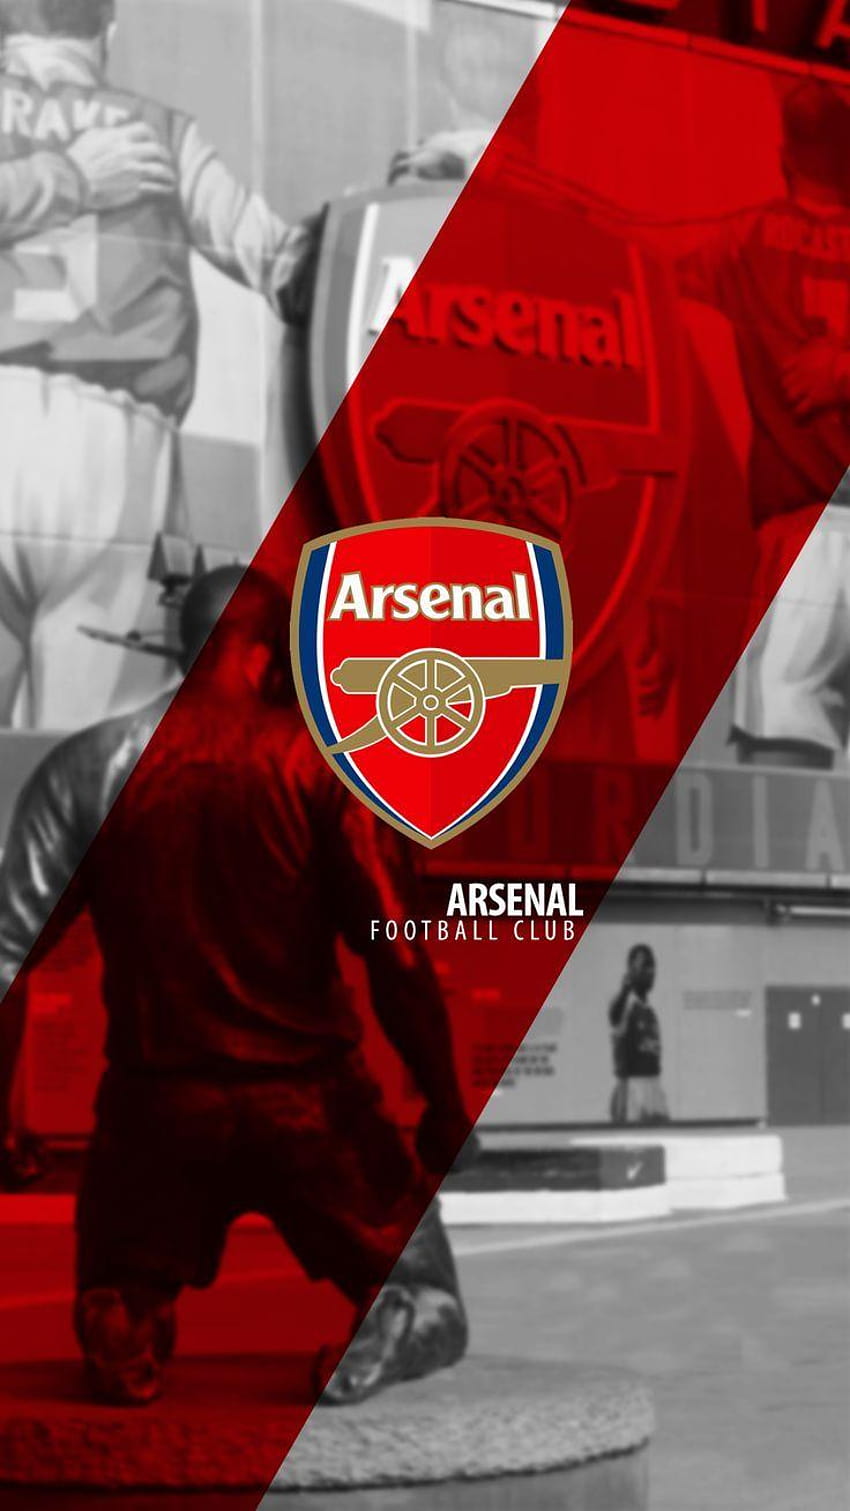 The Gunners Arsenal FC wallpaper ponsel HD